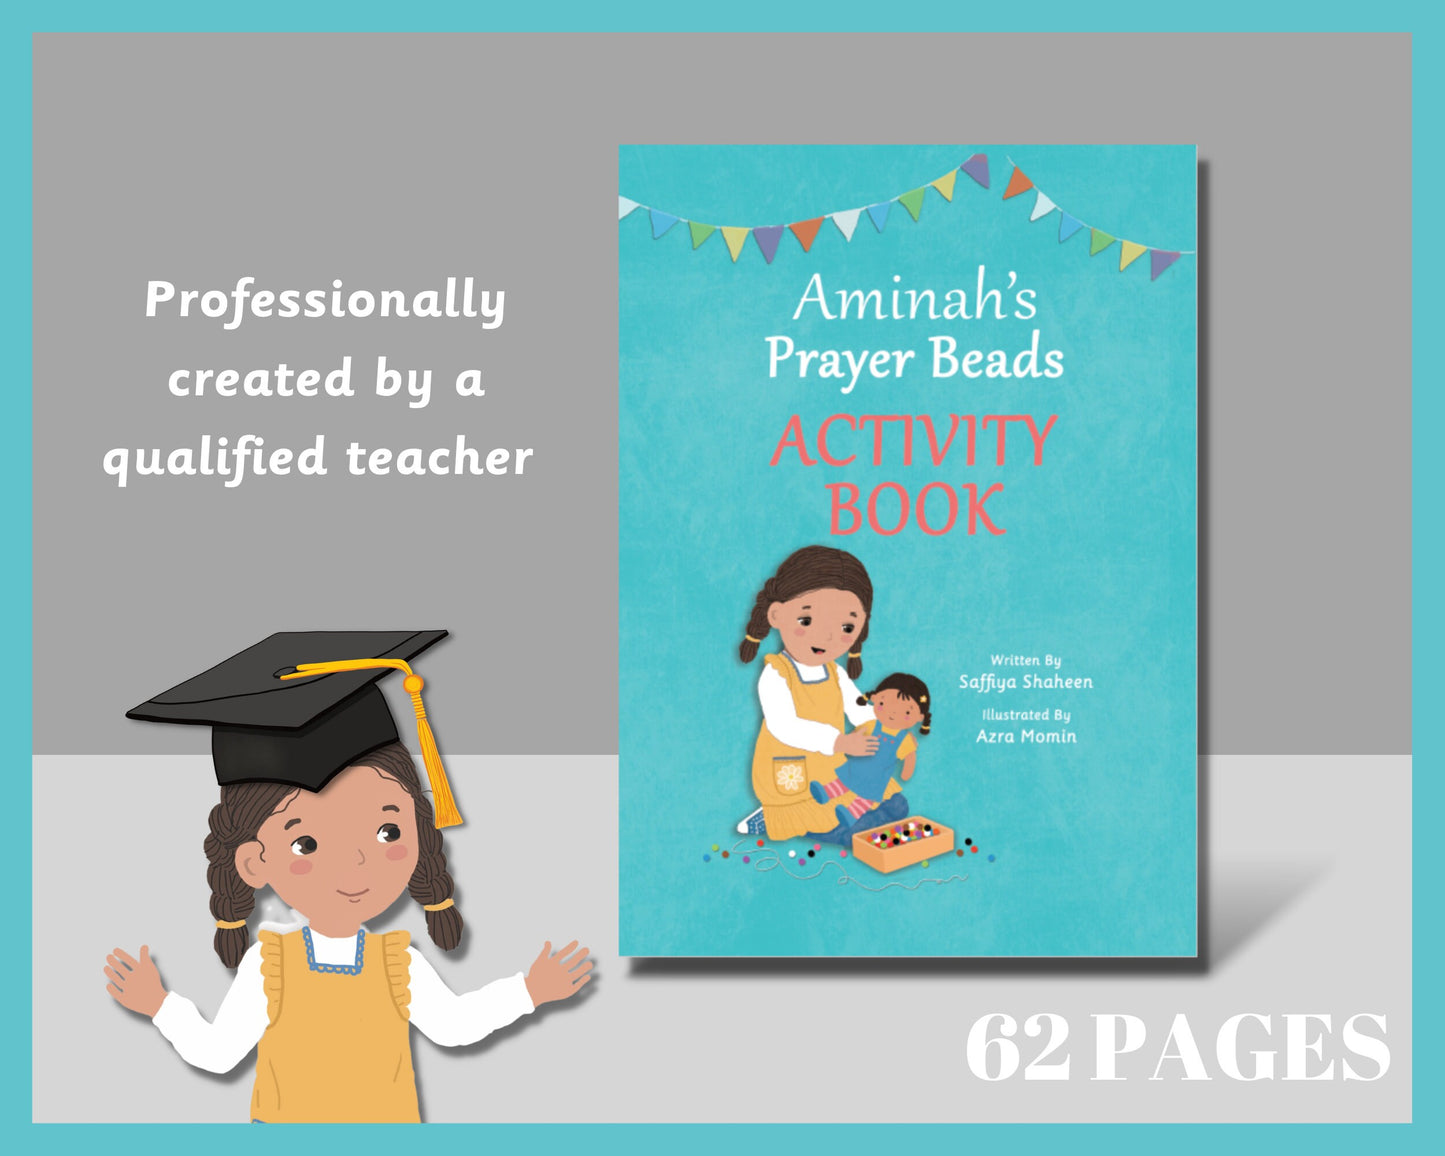 Aminah’s Prayer Beads Activity Book